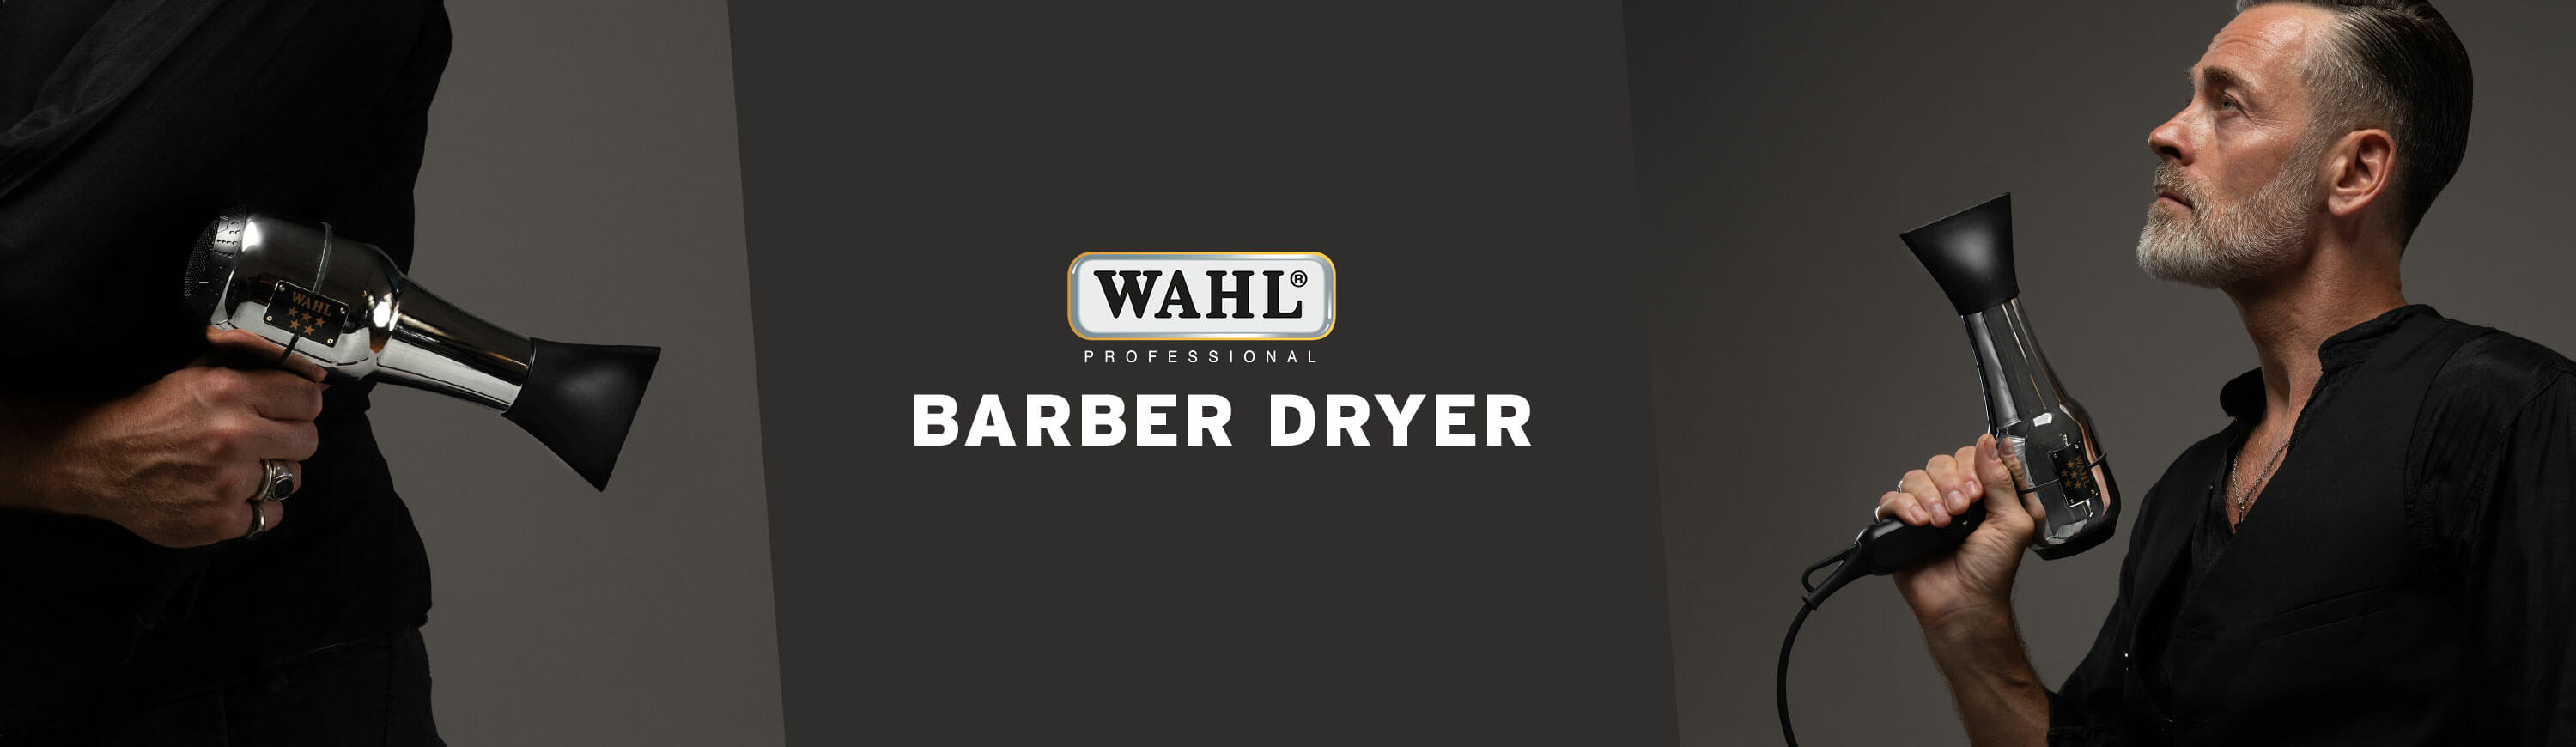 cover barber dryer wahl professional.jpg